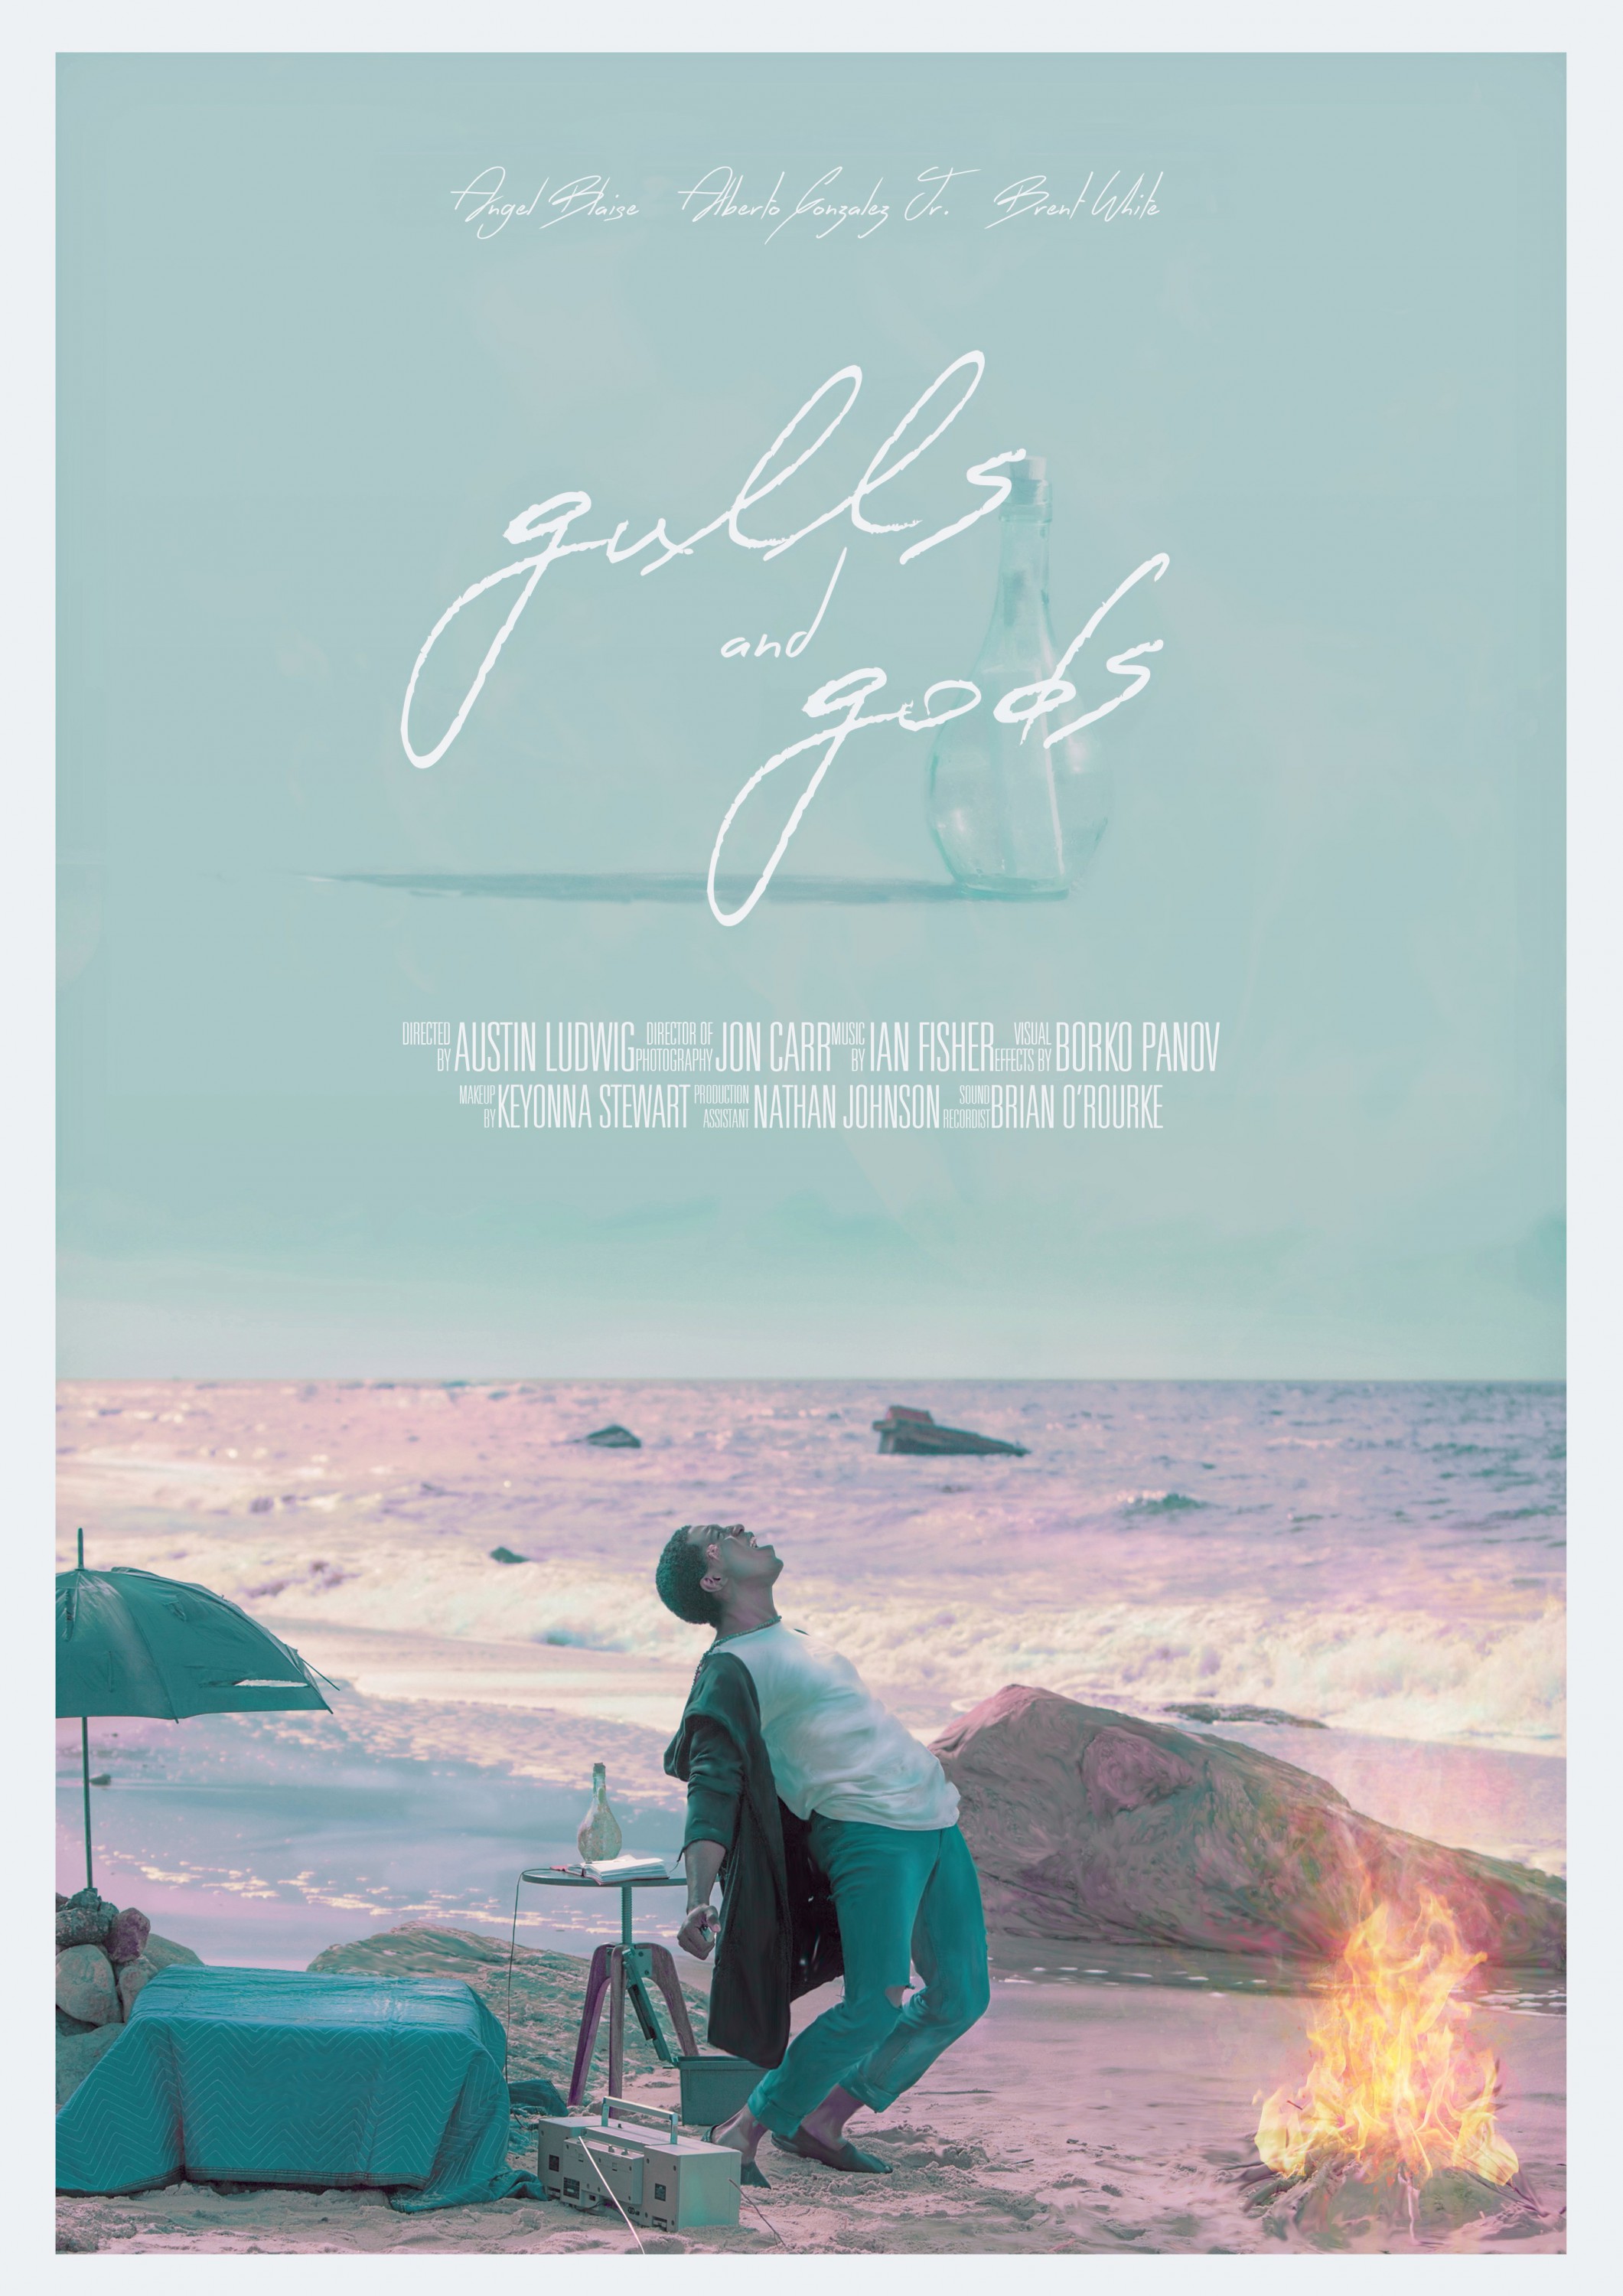 Mega Sized Movie Poster Image for Gulls and Gods